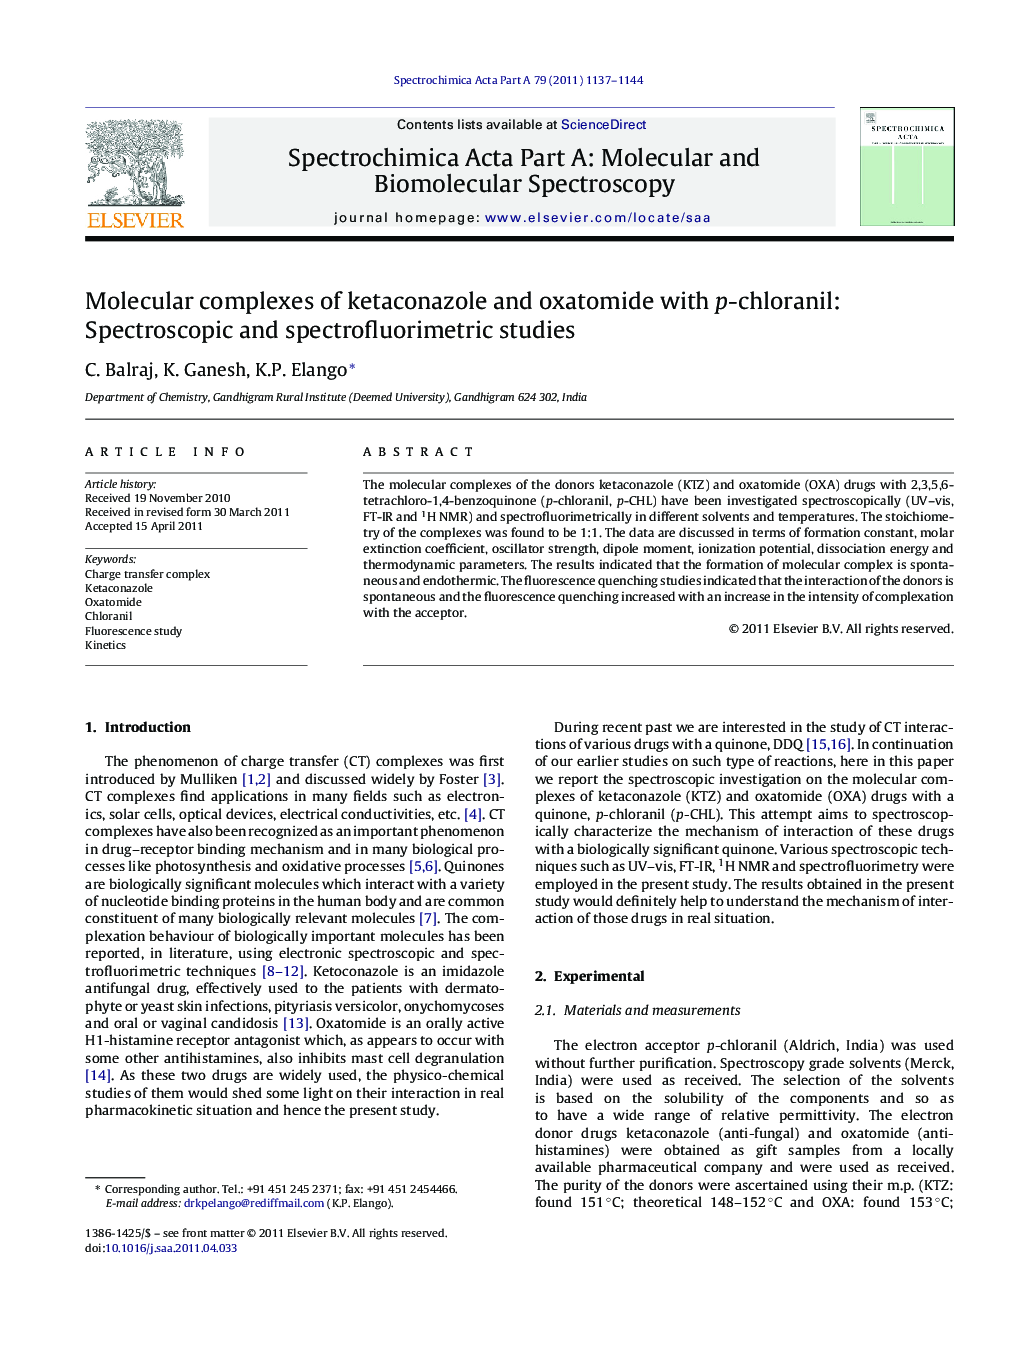 Molecular complexes of ketaconazole and oxatomide with p-chloranil: Spectroscopic and spectrofluorimetric studies